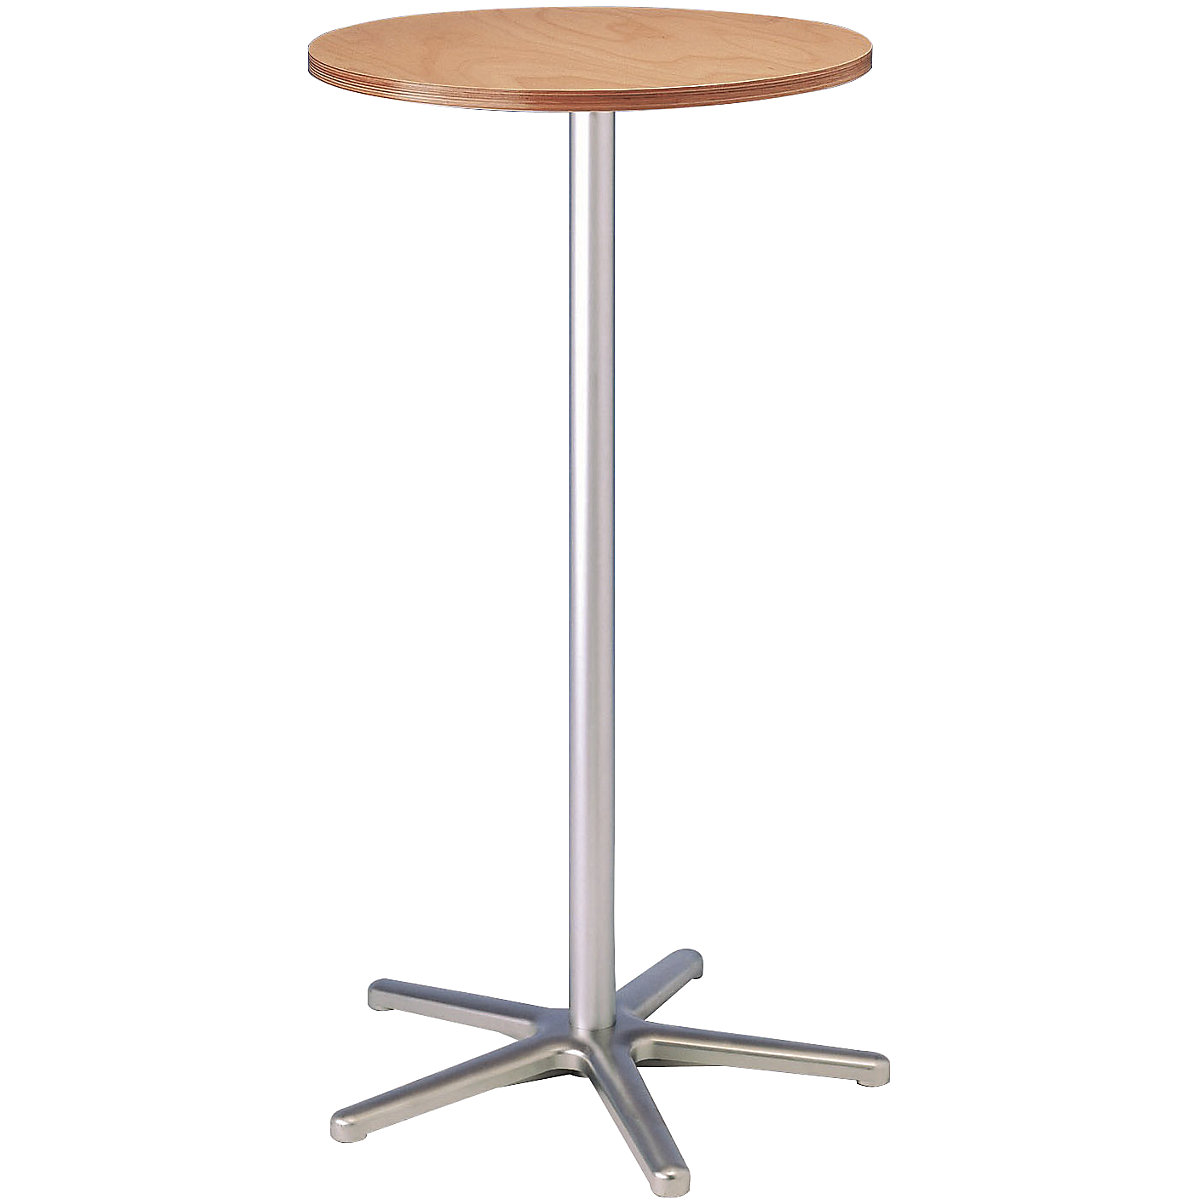 Pedestal table, Ø 600 mm – MAUL, 1100 mm high, silver frame, beech finish tabletop-2